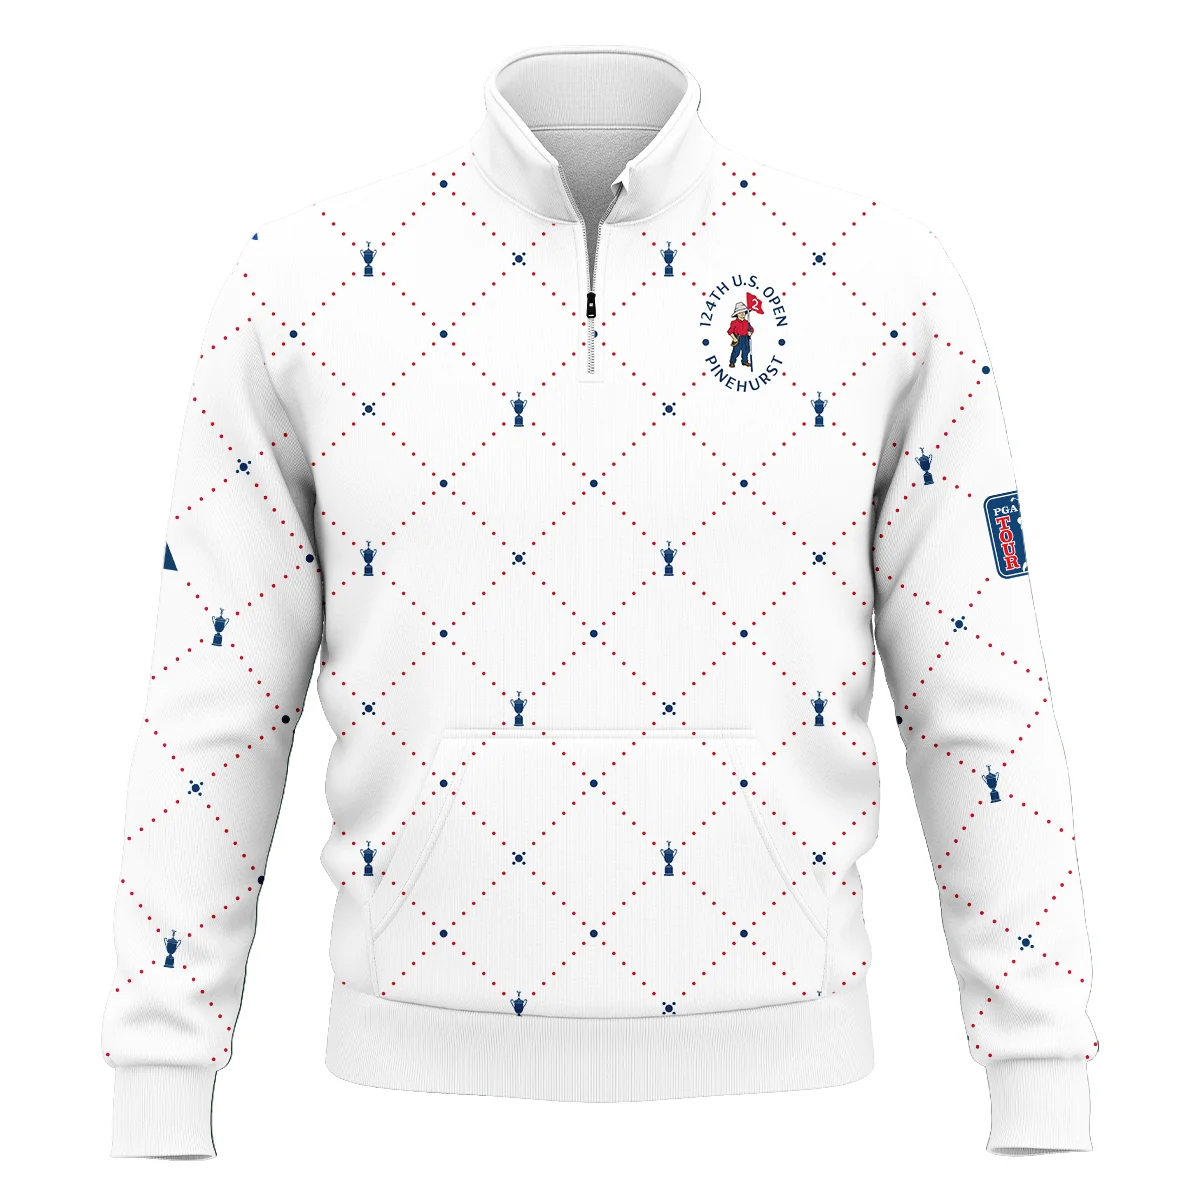 Argyle Pattern With Cup 124th U.S. Open Pinehurst Adidas Unisex Sweatshirt Style Classic Sweatshirt